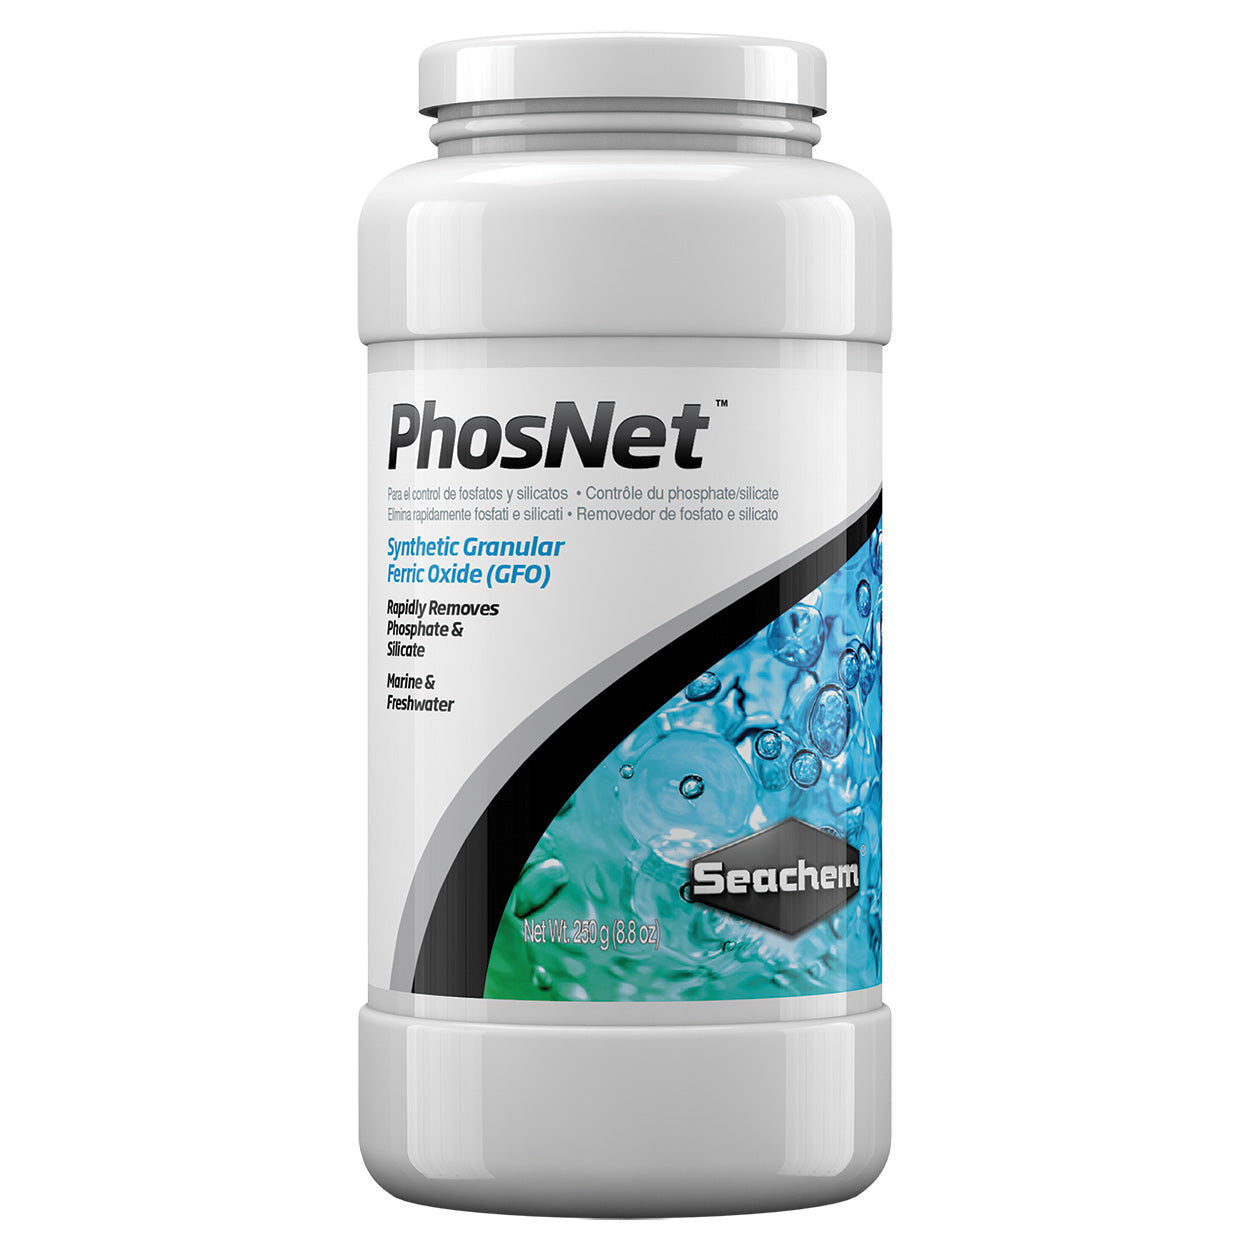 PhosNet